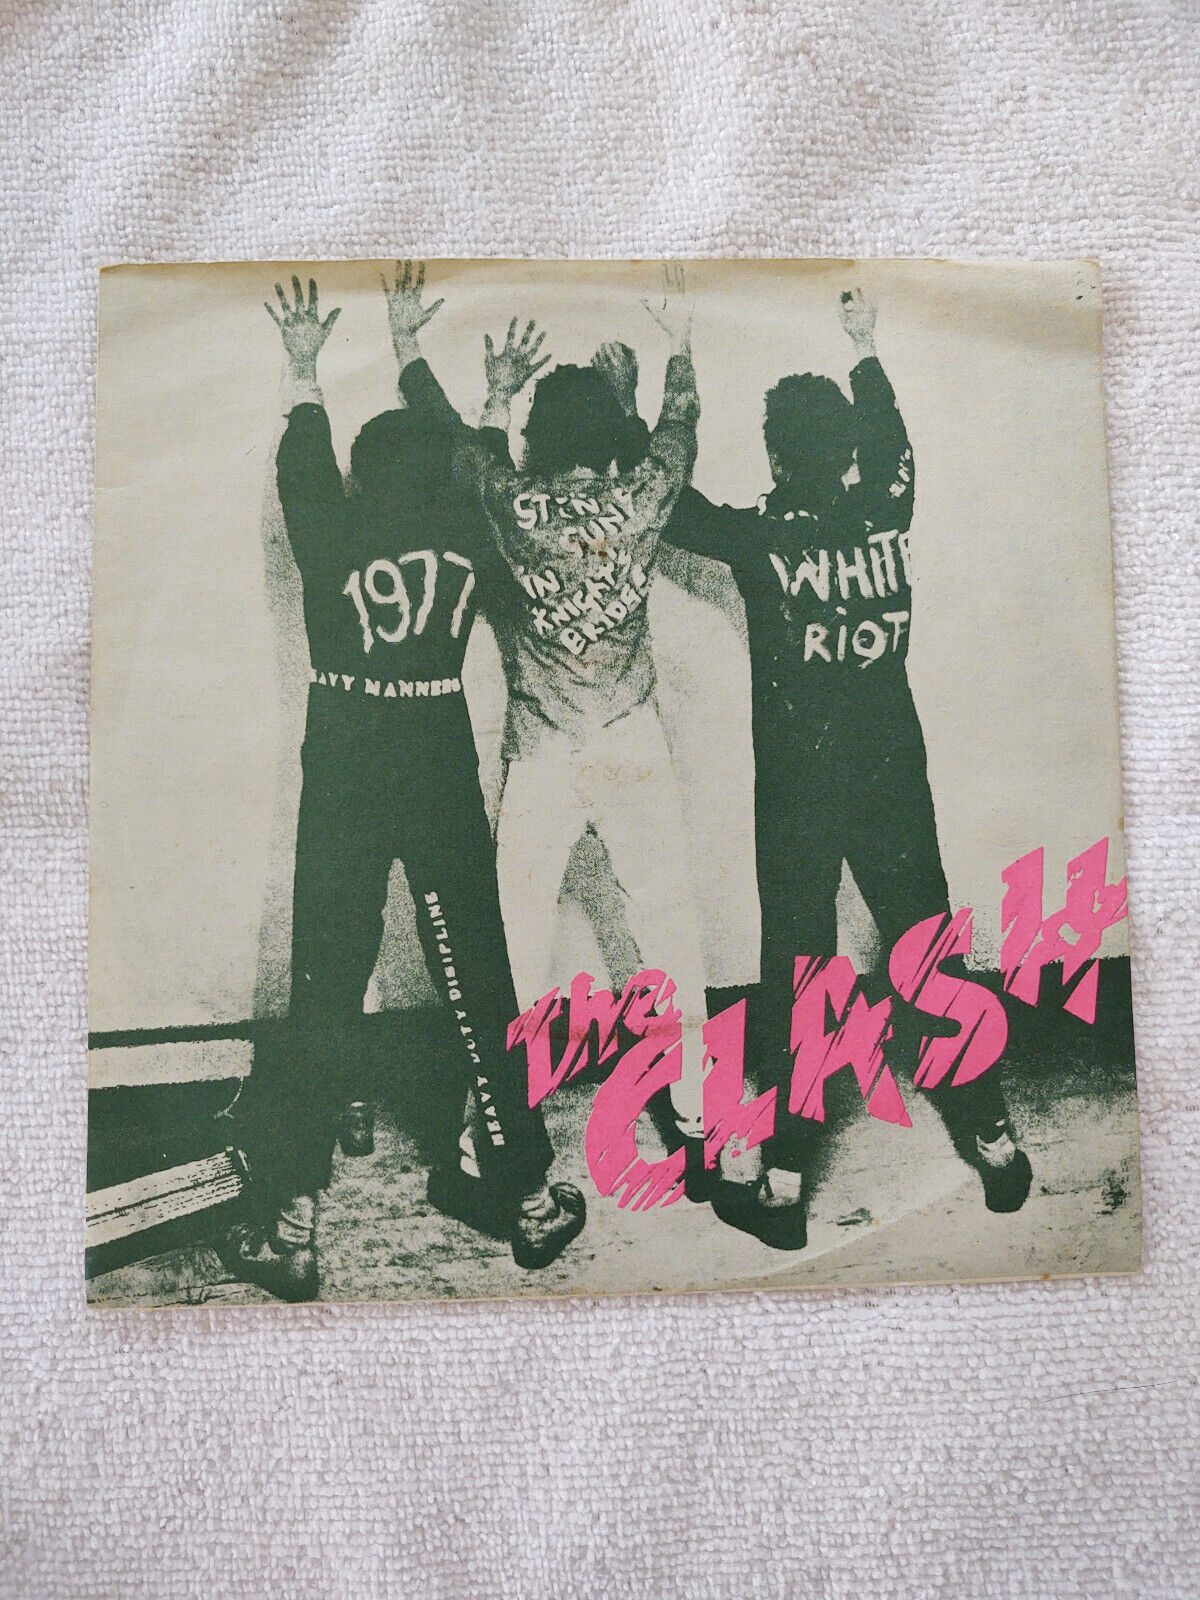 The Clash - White Riot/1977 import single CBS 5058